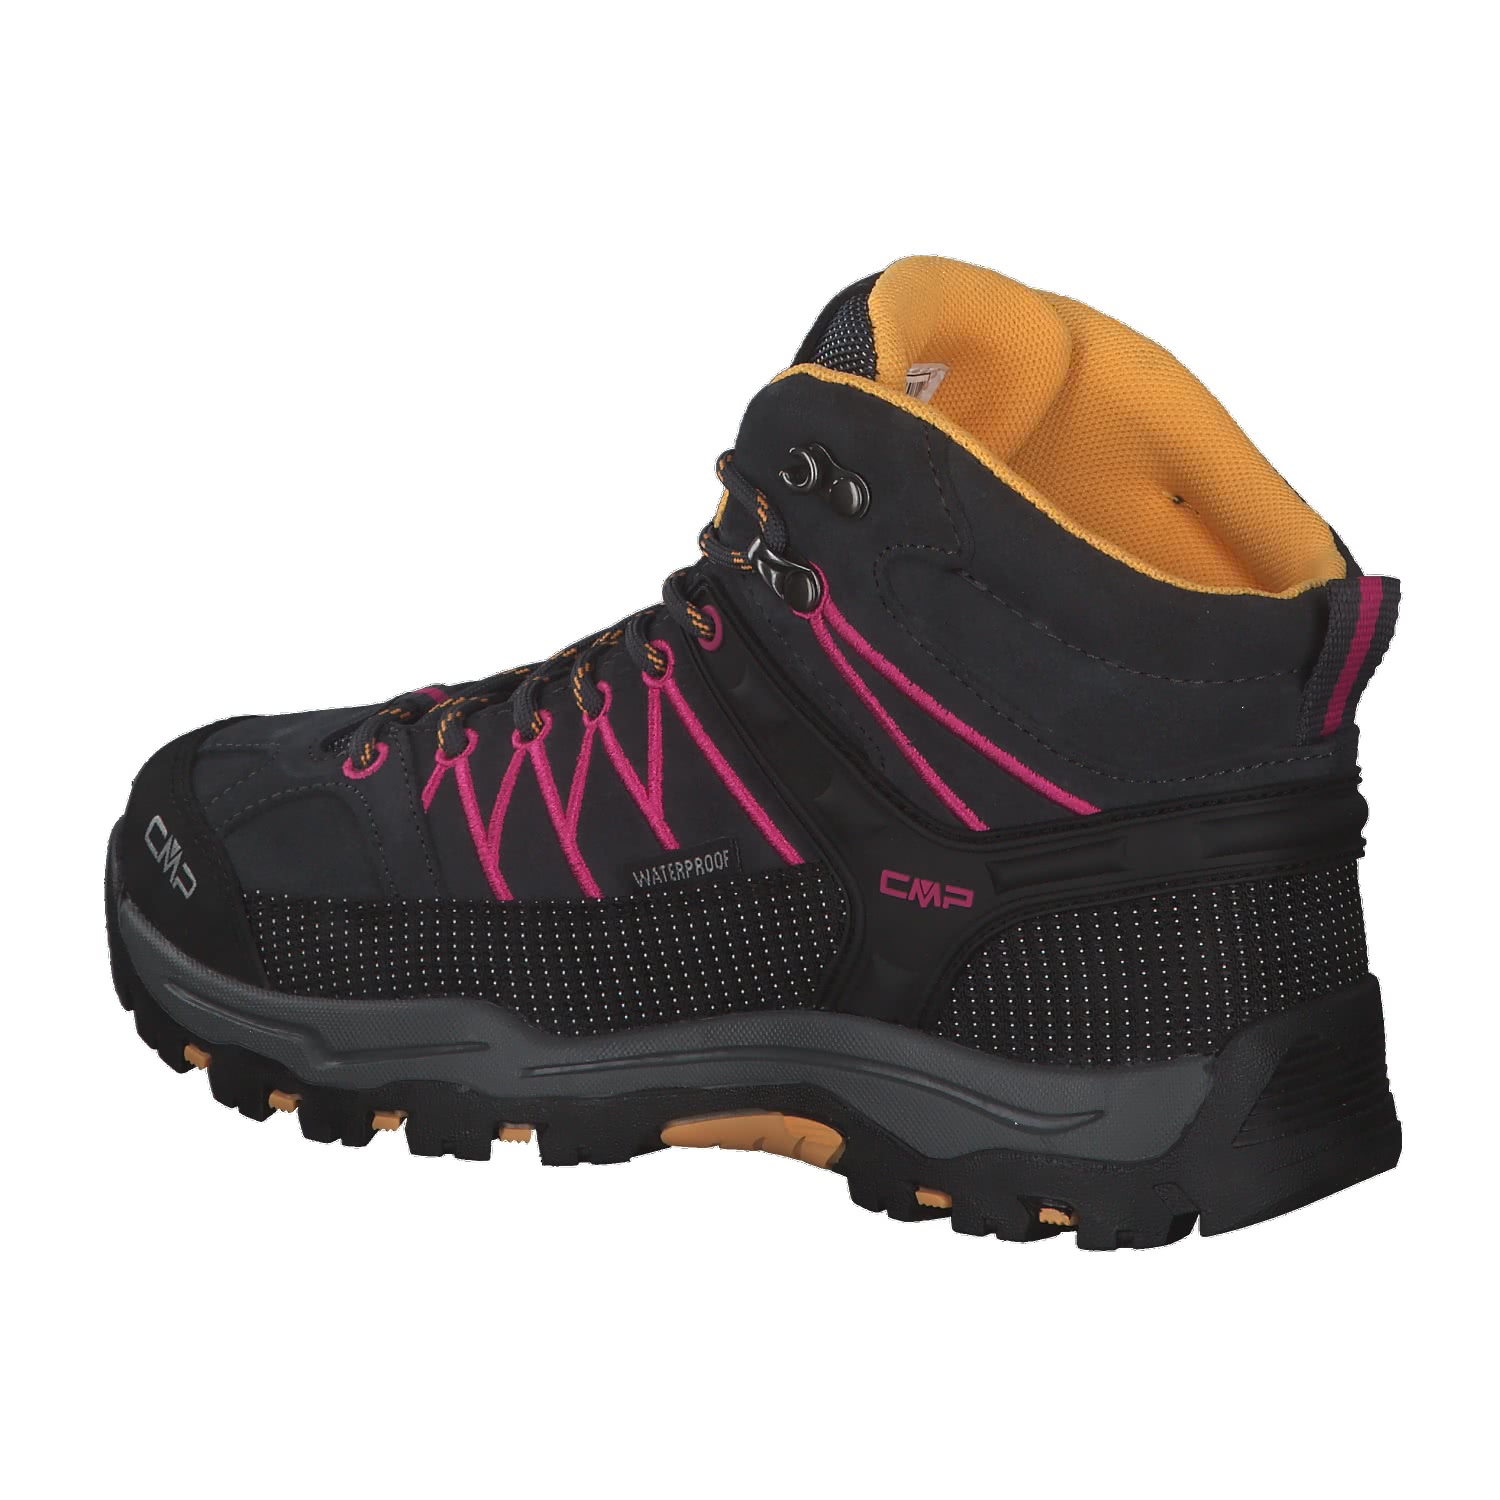 CMP Kinder Trekking 3Q12944J Schuhe Rigel MID | eBay